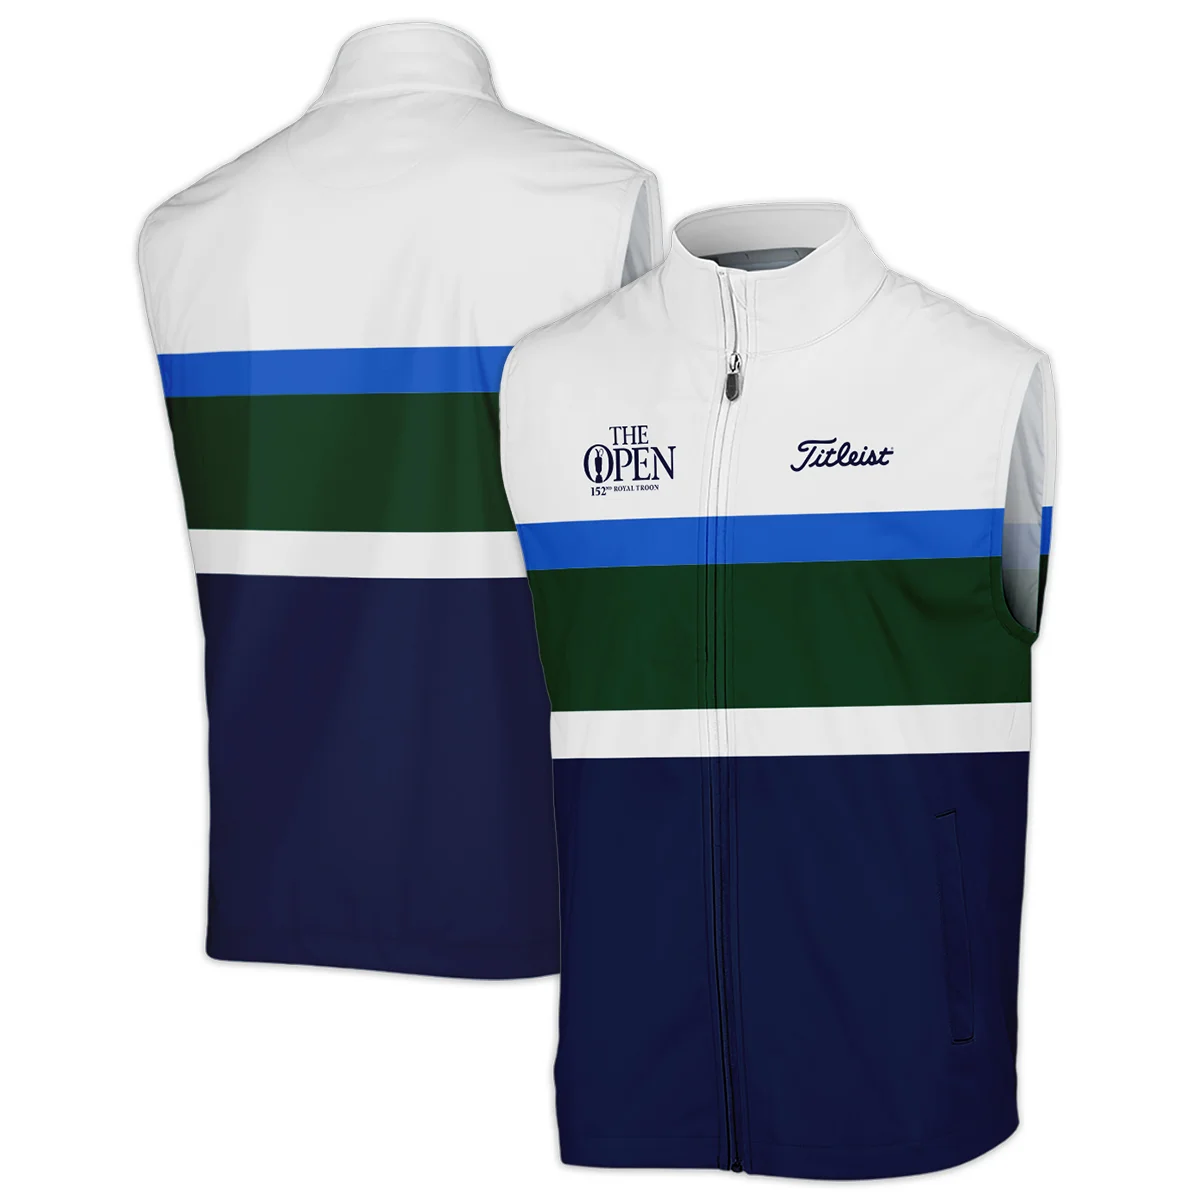 White Blue Green Background Titleist 152nd Open Championship Zipper Hoodie Shirt All Over Prints HOTOP270624A01TLZHD